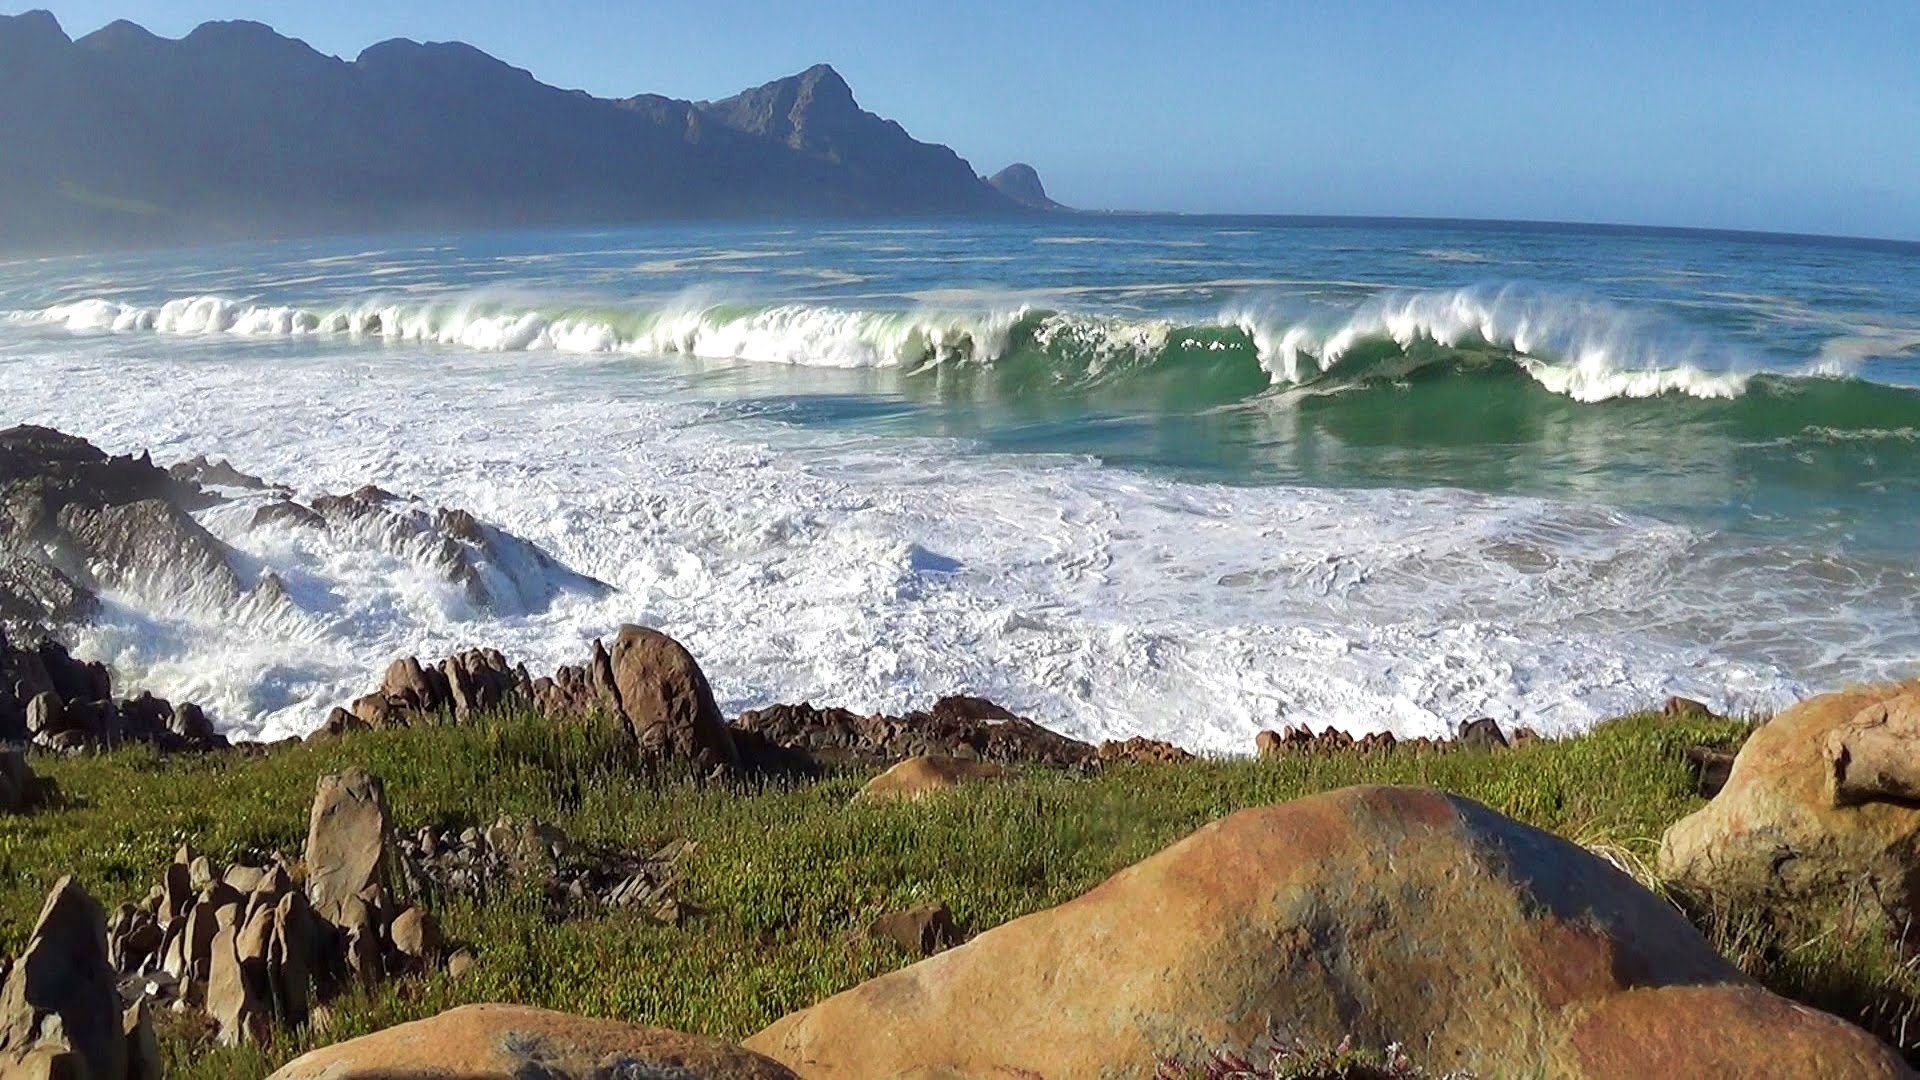 Beautiful 1hr nature scene waves crashing video